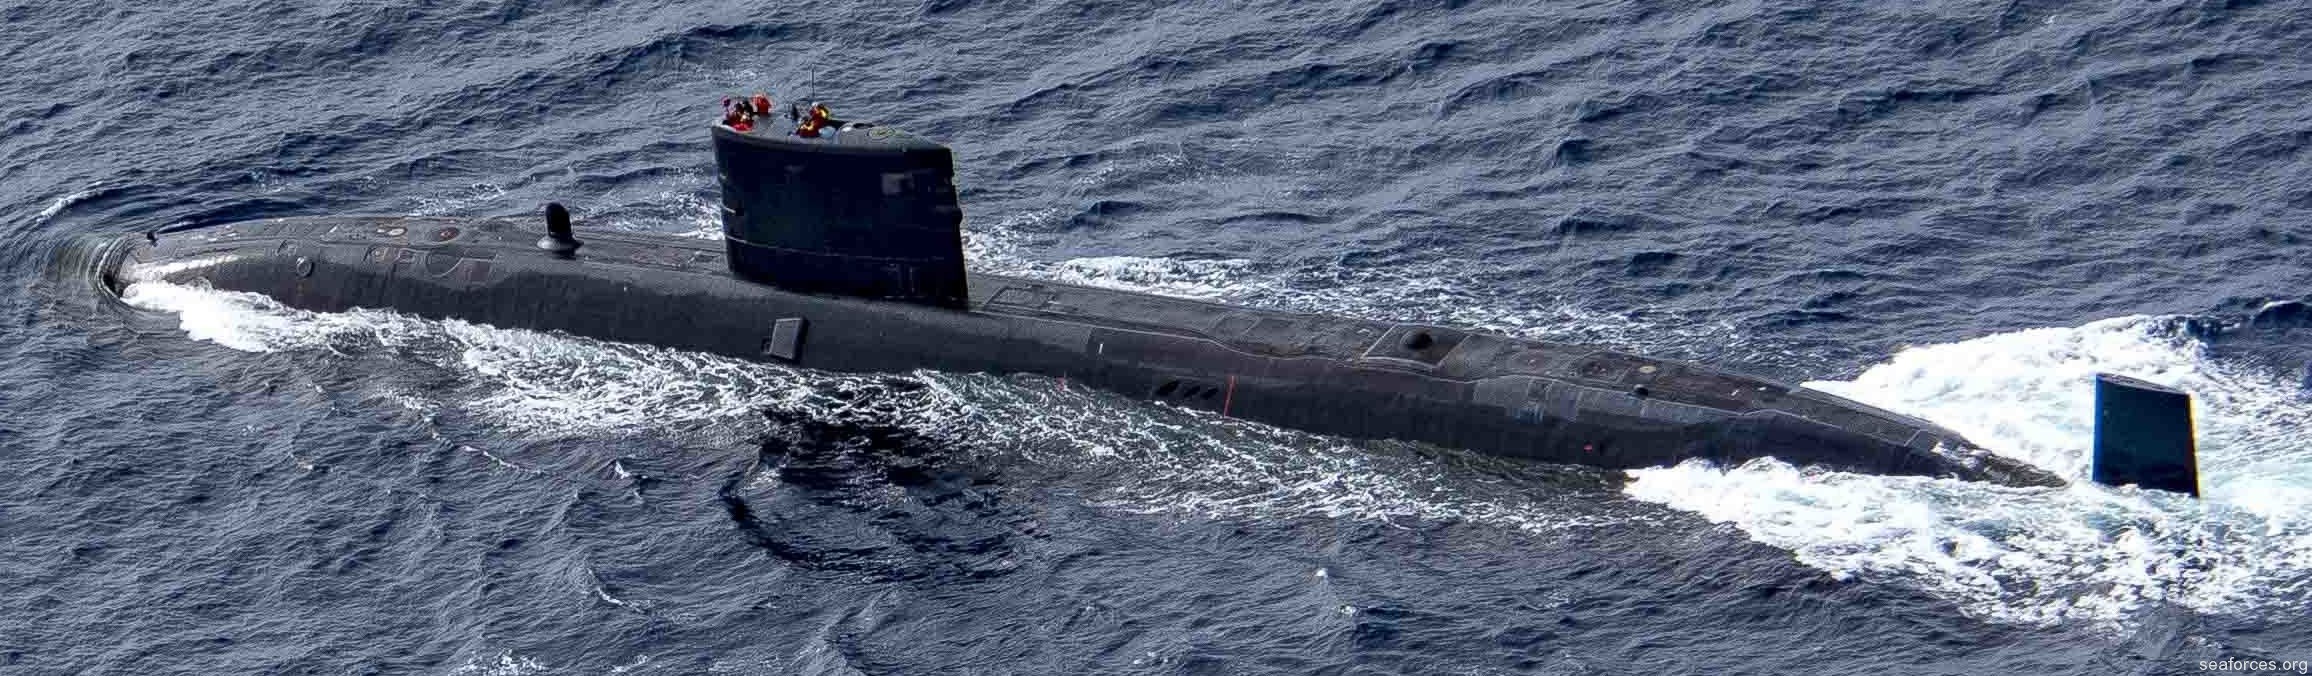 hms trenchant s-91 trafalgar class attack submarine royal navy 05